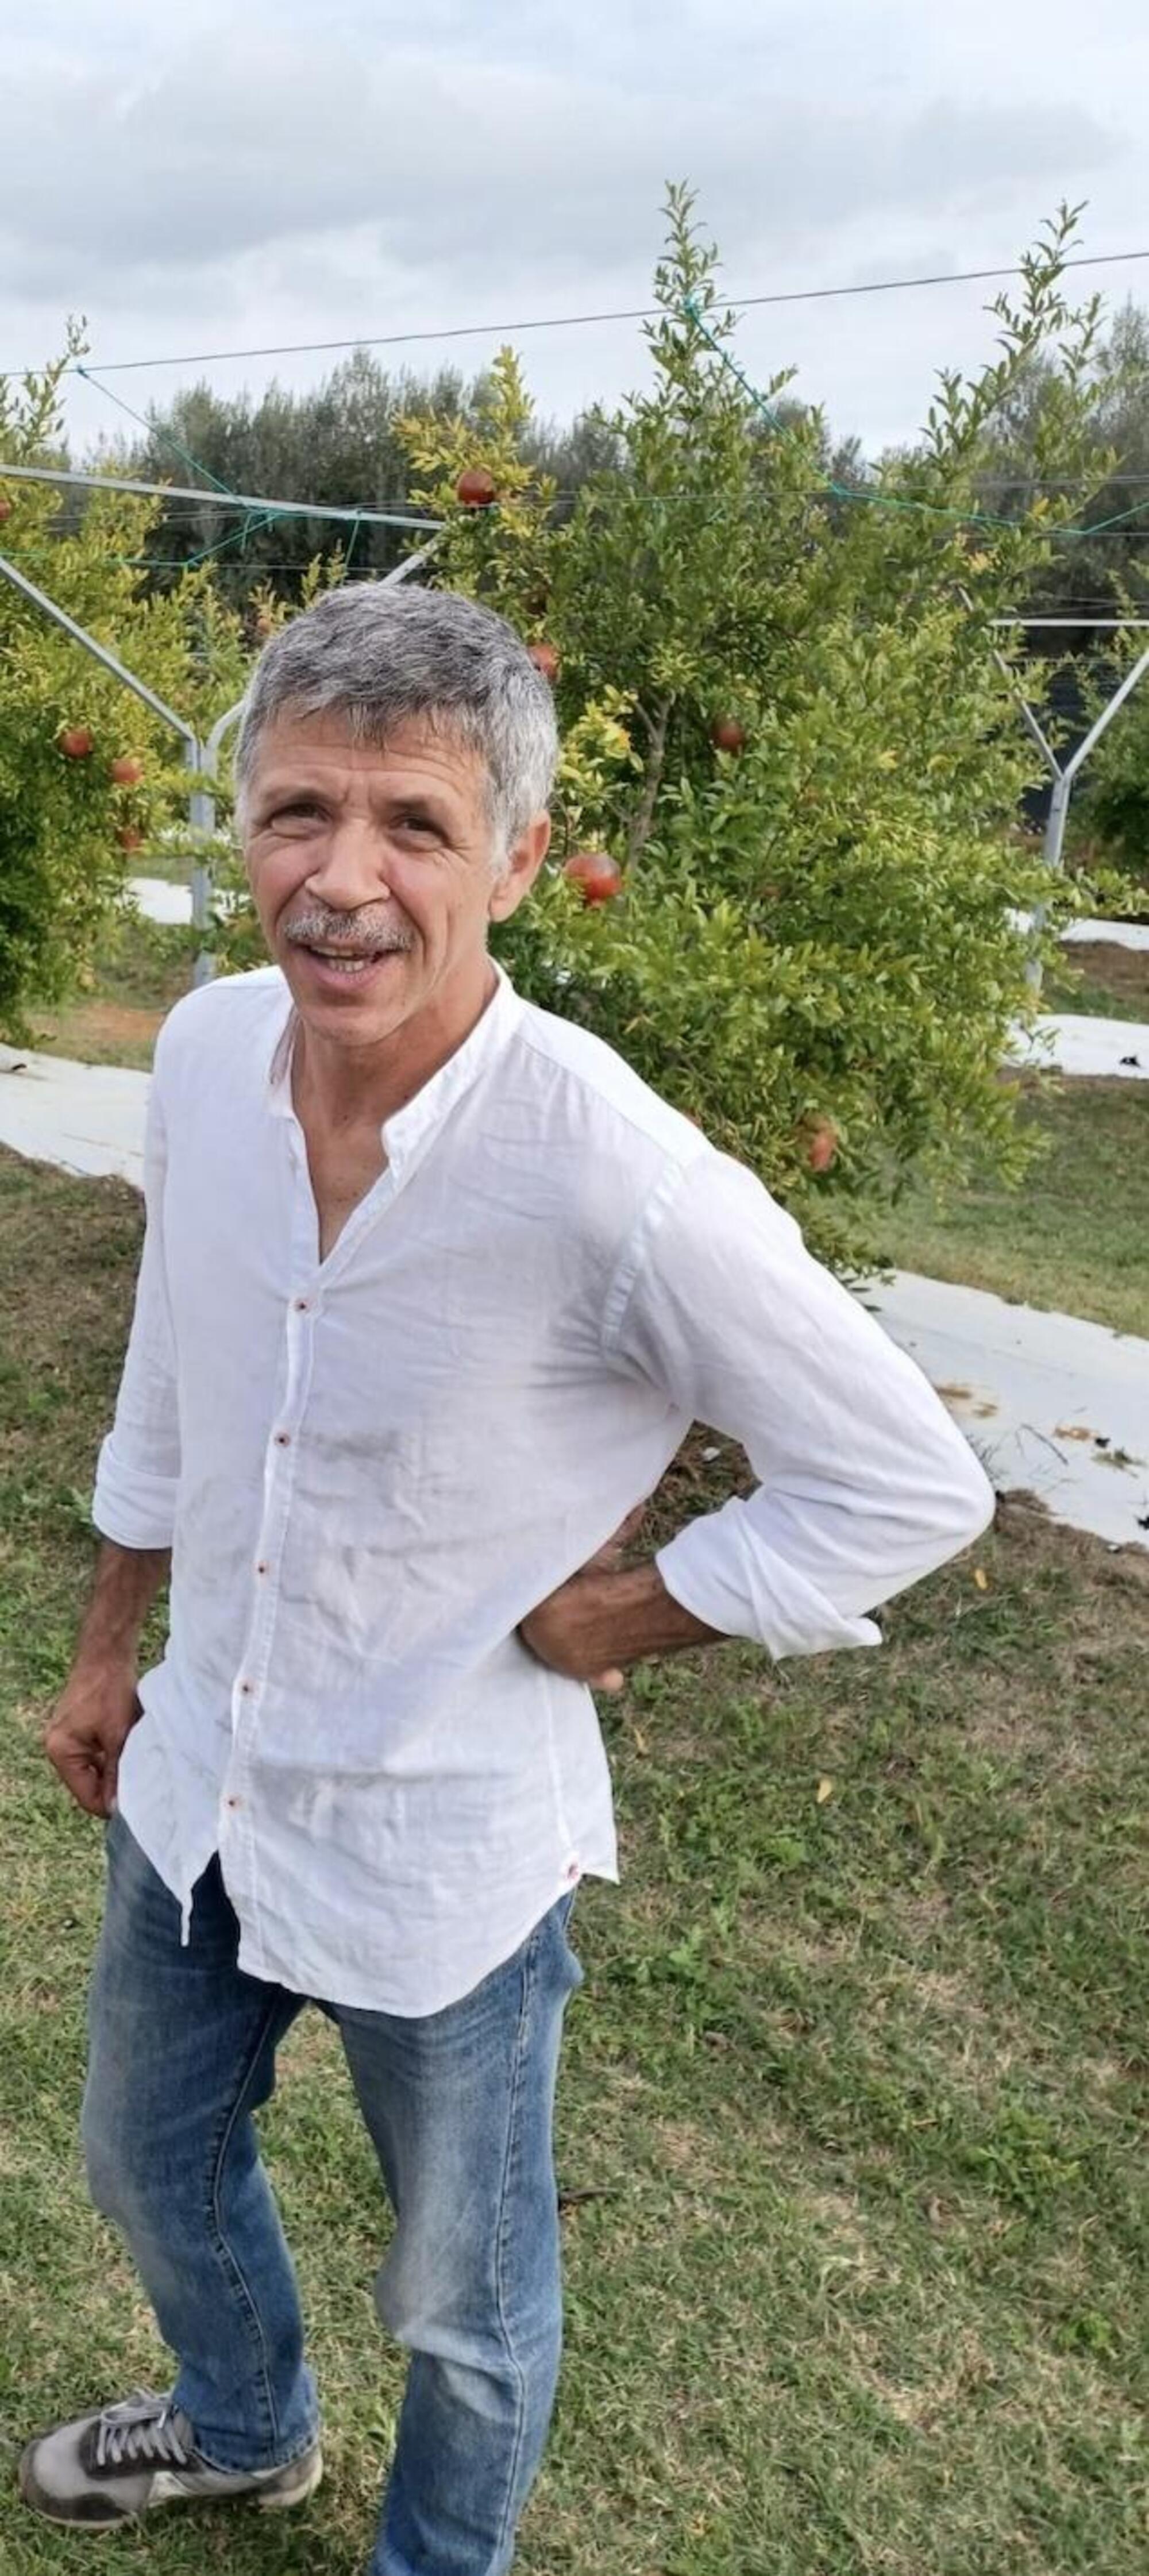 Marco Morandi